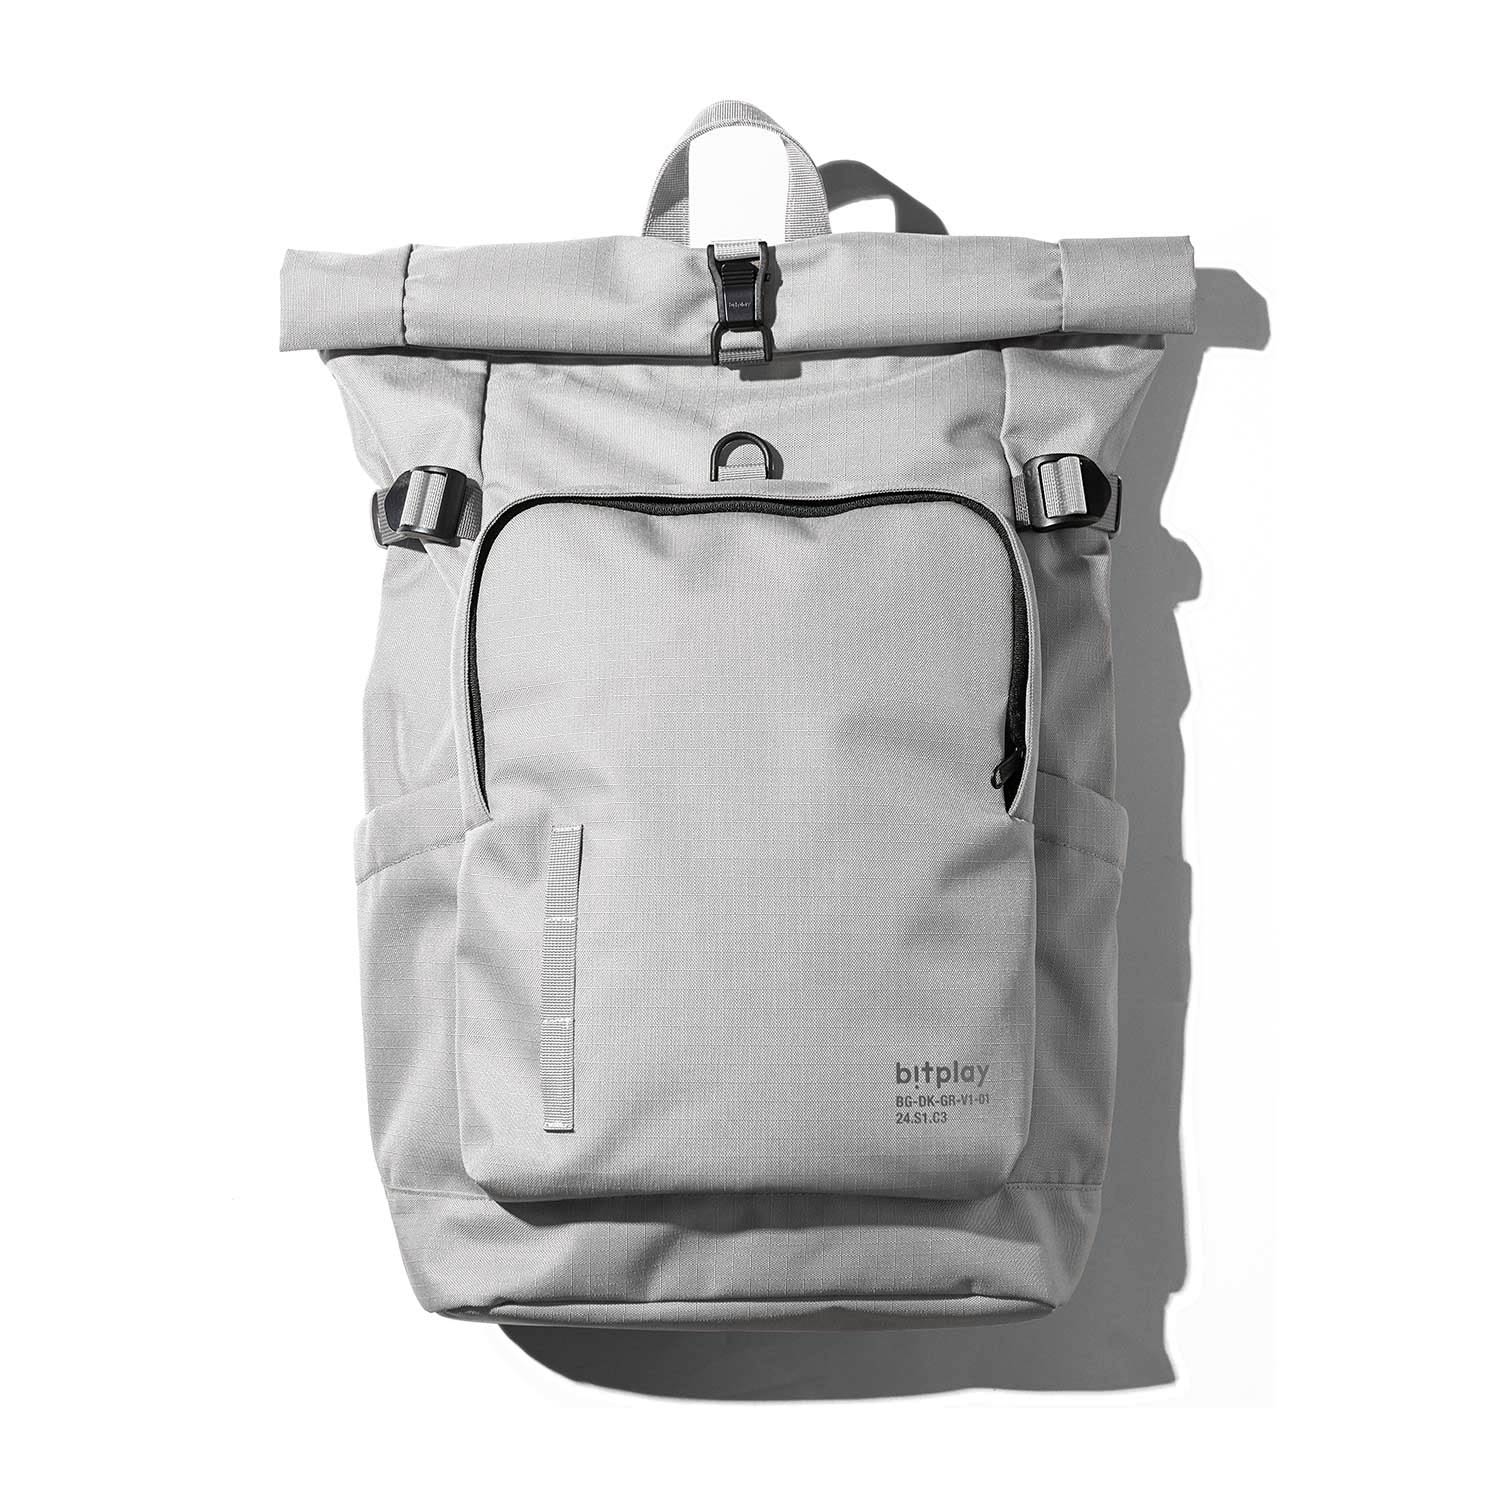 Bitplay Urban Daypack 24L Light Travel Laptop Bag